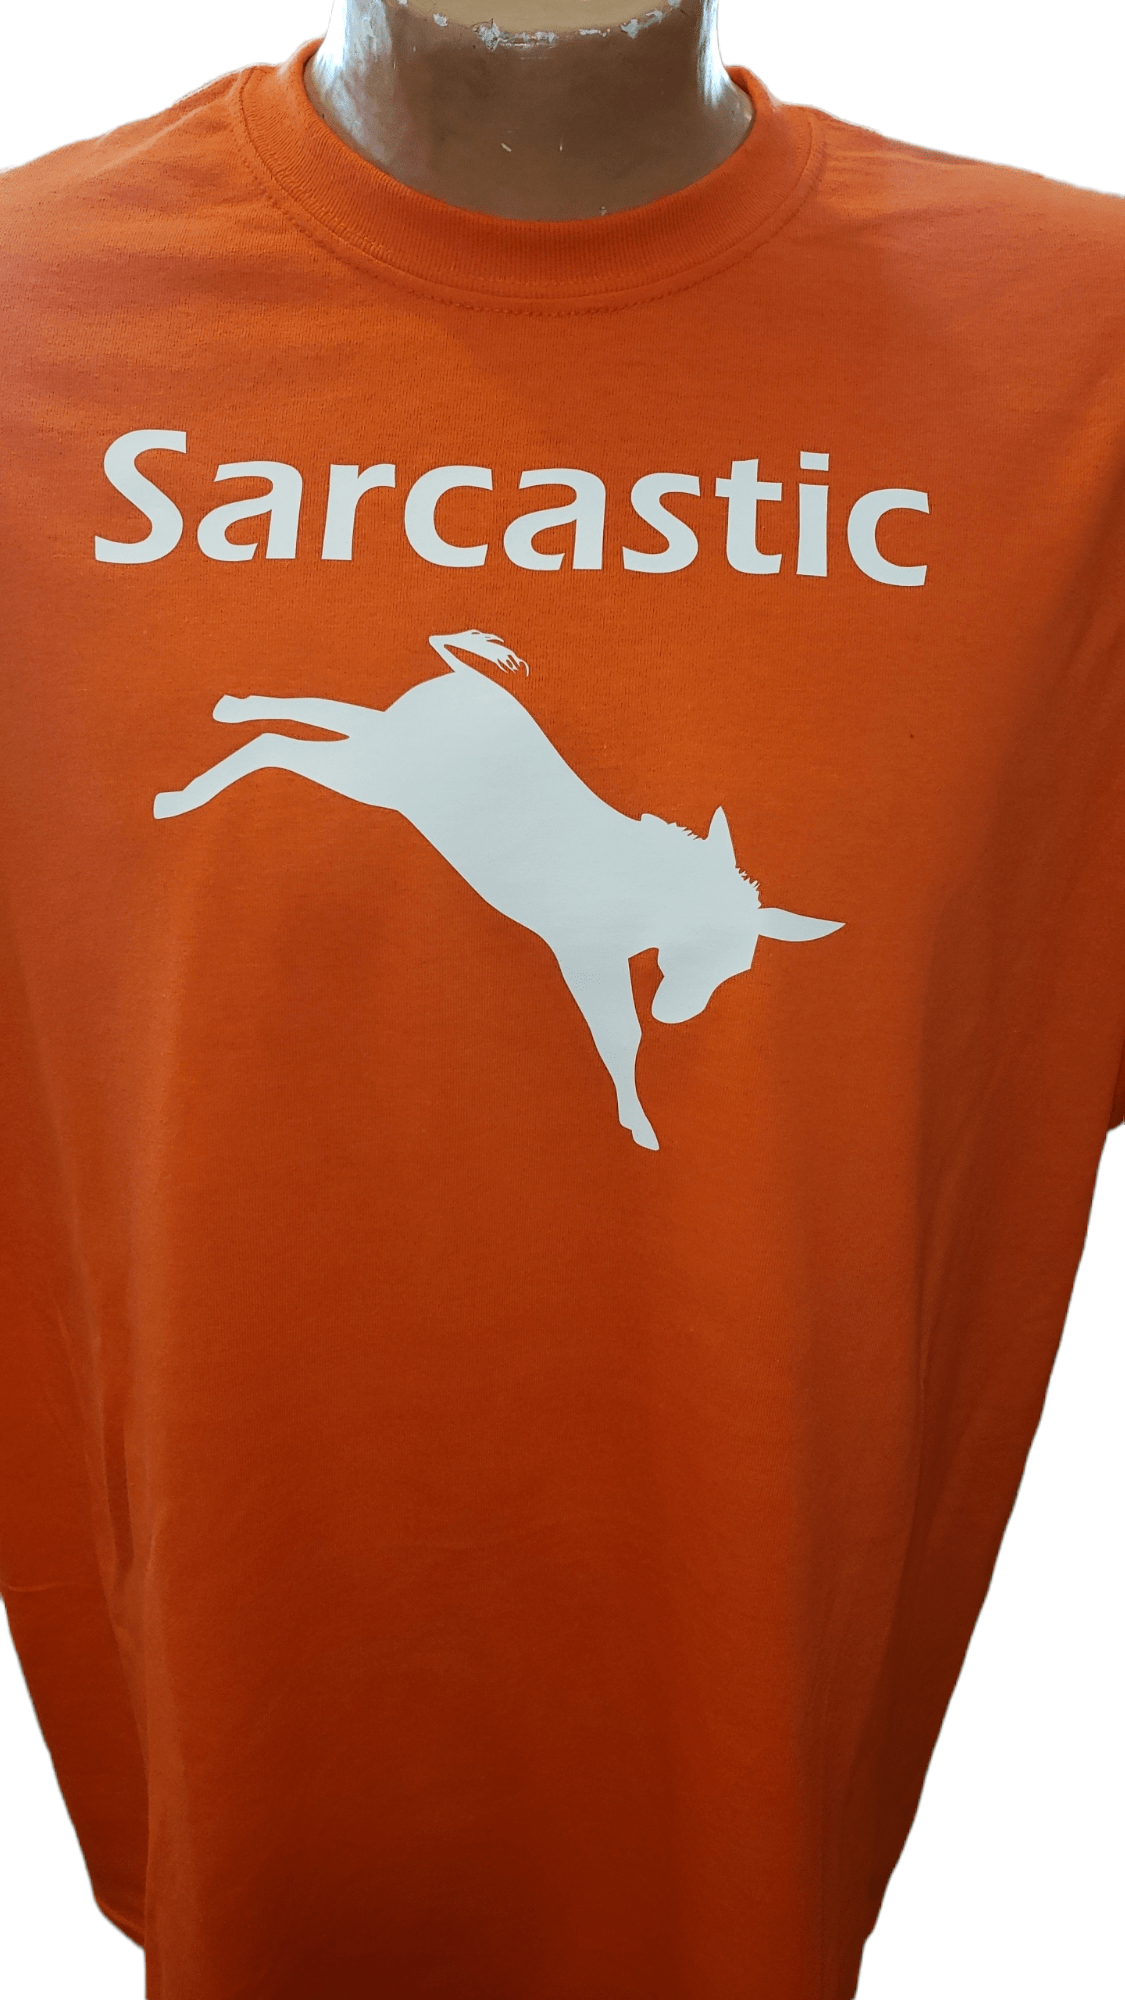 Carrot Stick Sports Shirts 2XL Sarcastic Ass T-Shirt Sarcastic Ass T-Shirt. The flagship shirt for Carrot Stick Sports 